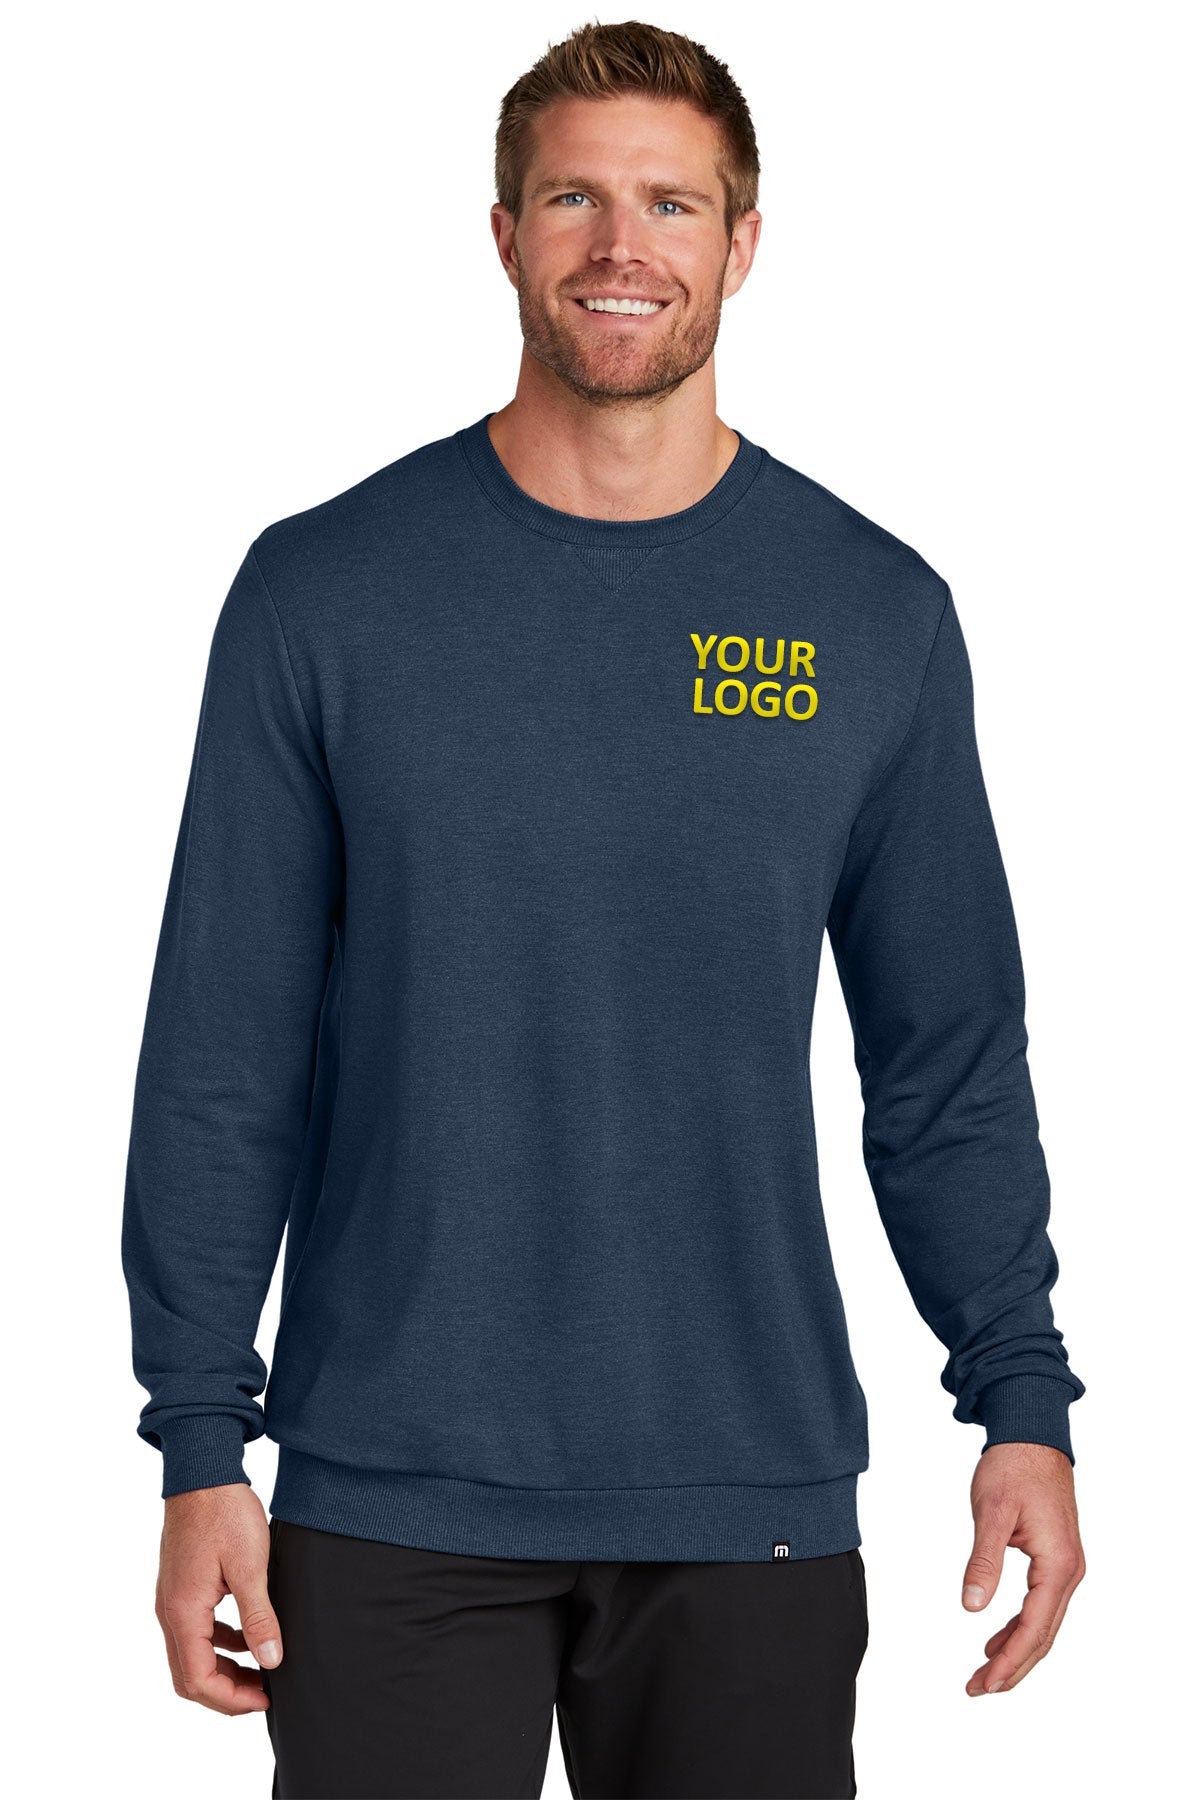 custom design sweatshirts